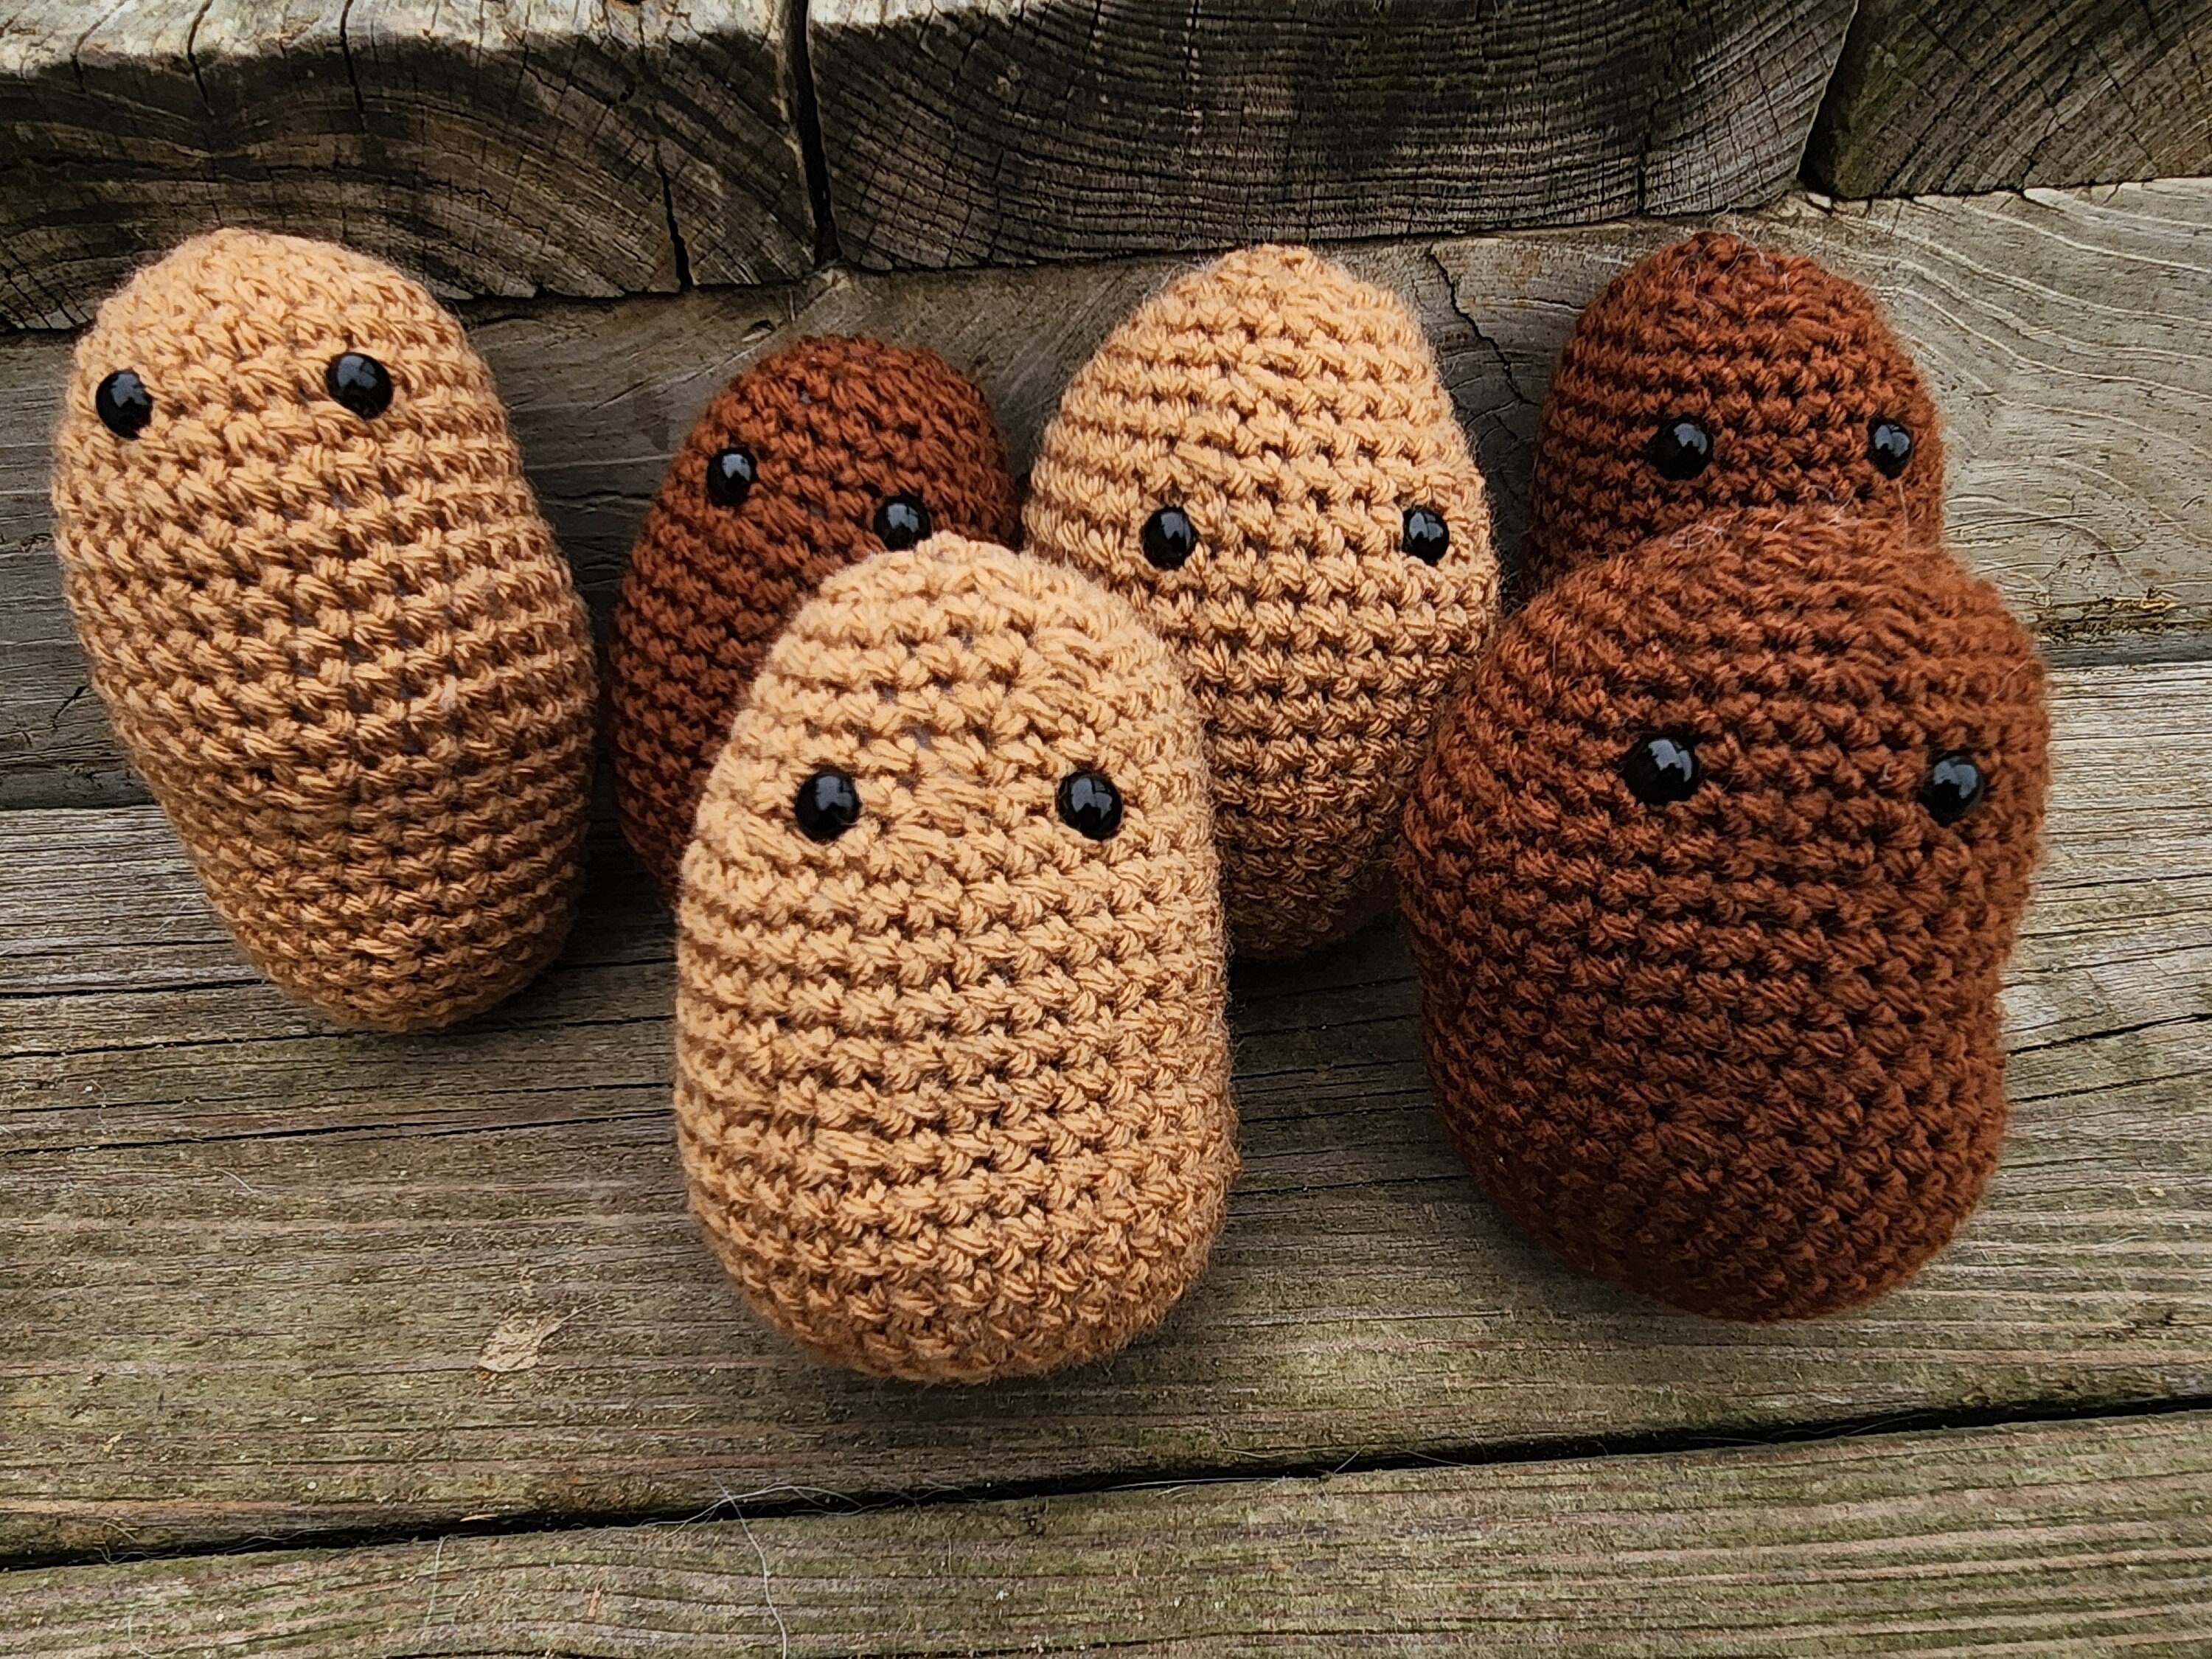  Hoedia Funny Positive Potato, Mini Knitted Positive Cute Potato  with Positive Card, Creative Cute Wool Inspirational Potato Crochet Doll  Funny Positive Gifts : Home & Kitchen